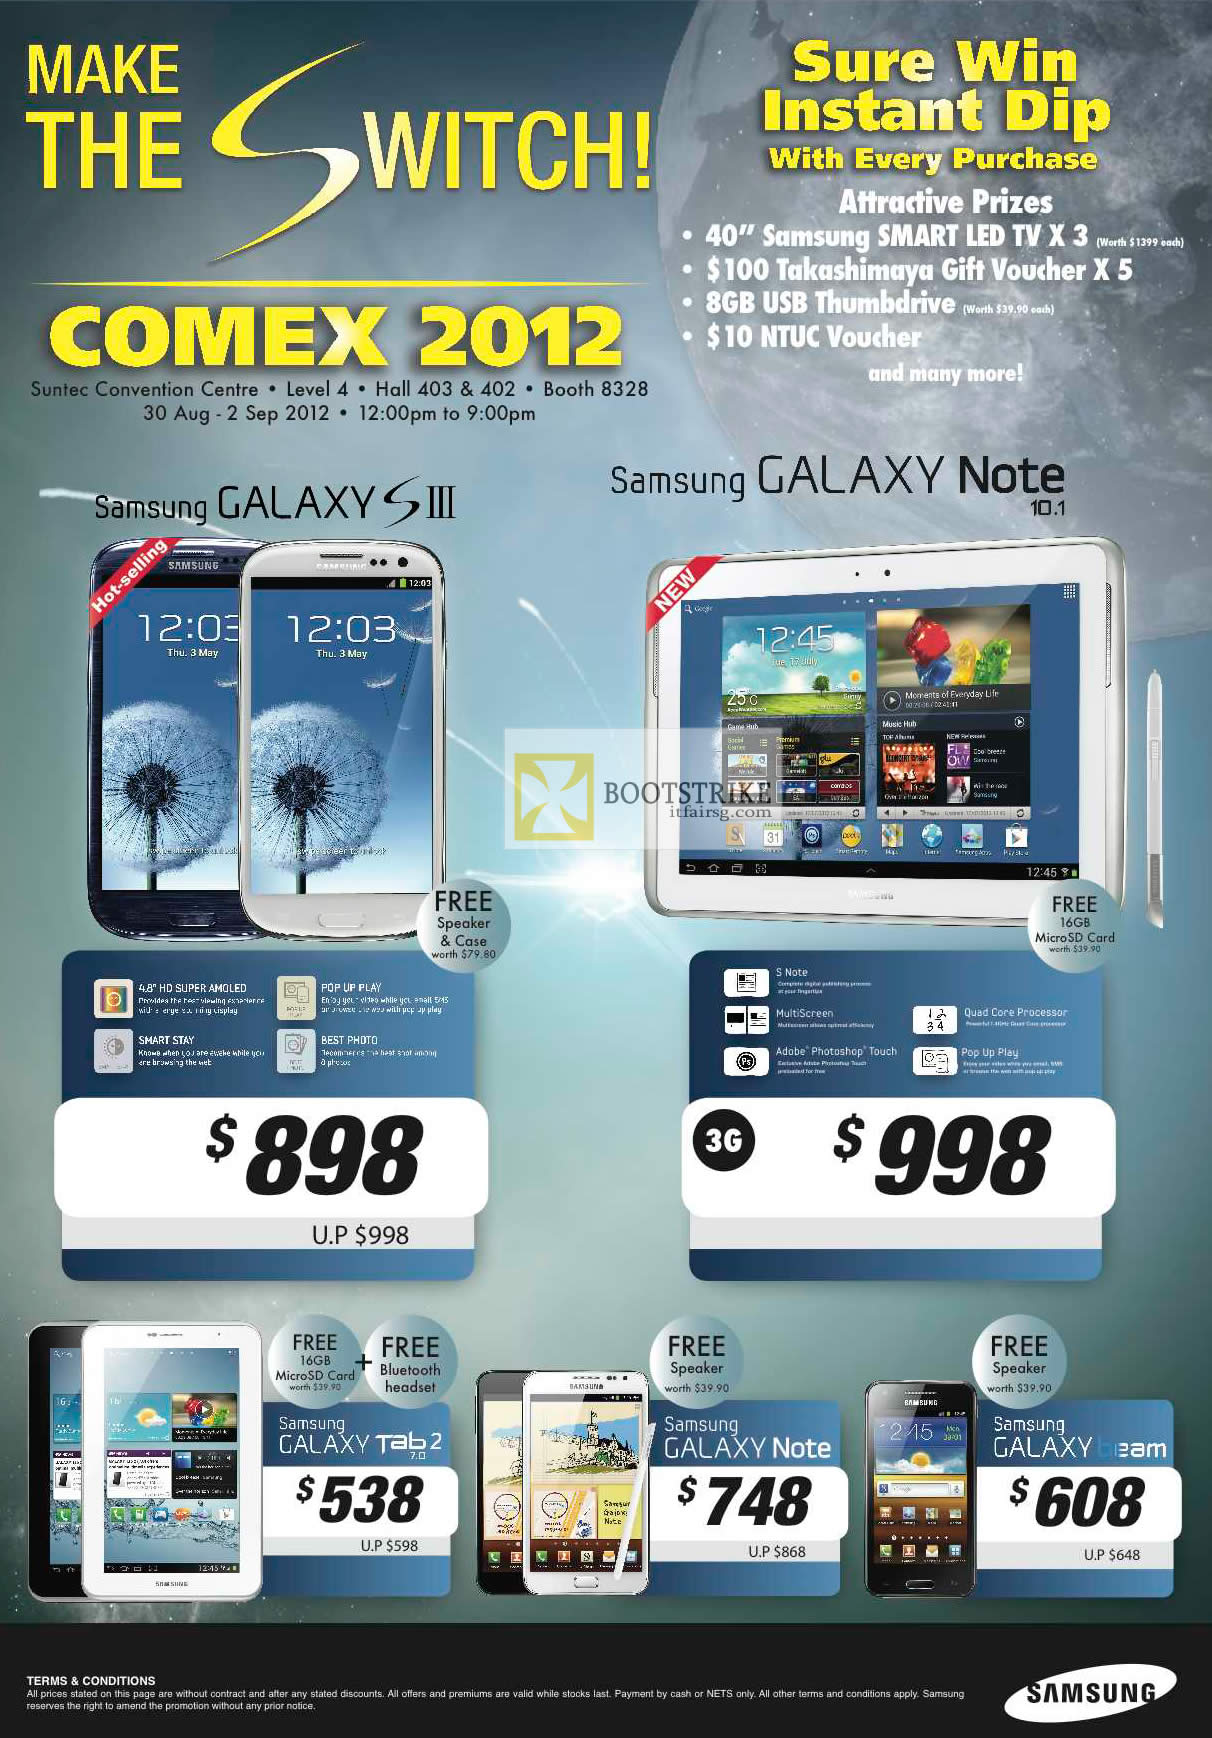 COMEX 2012 price list image brochure of Samsung Mobile Phones Galaxy S III, Note 10.1, Tab 2 7.0, Note, Beam